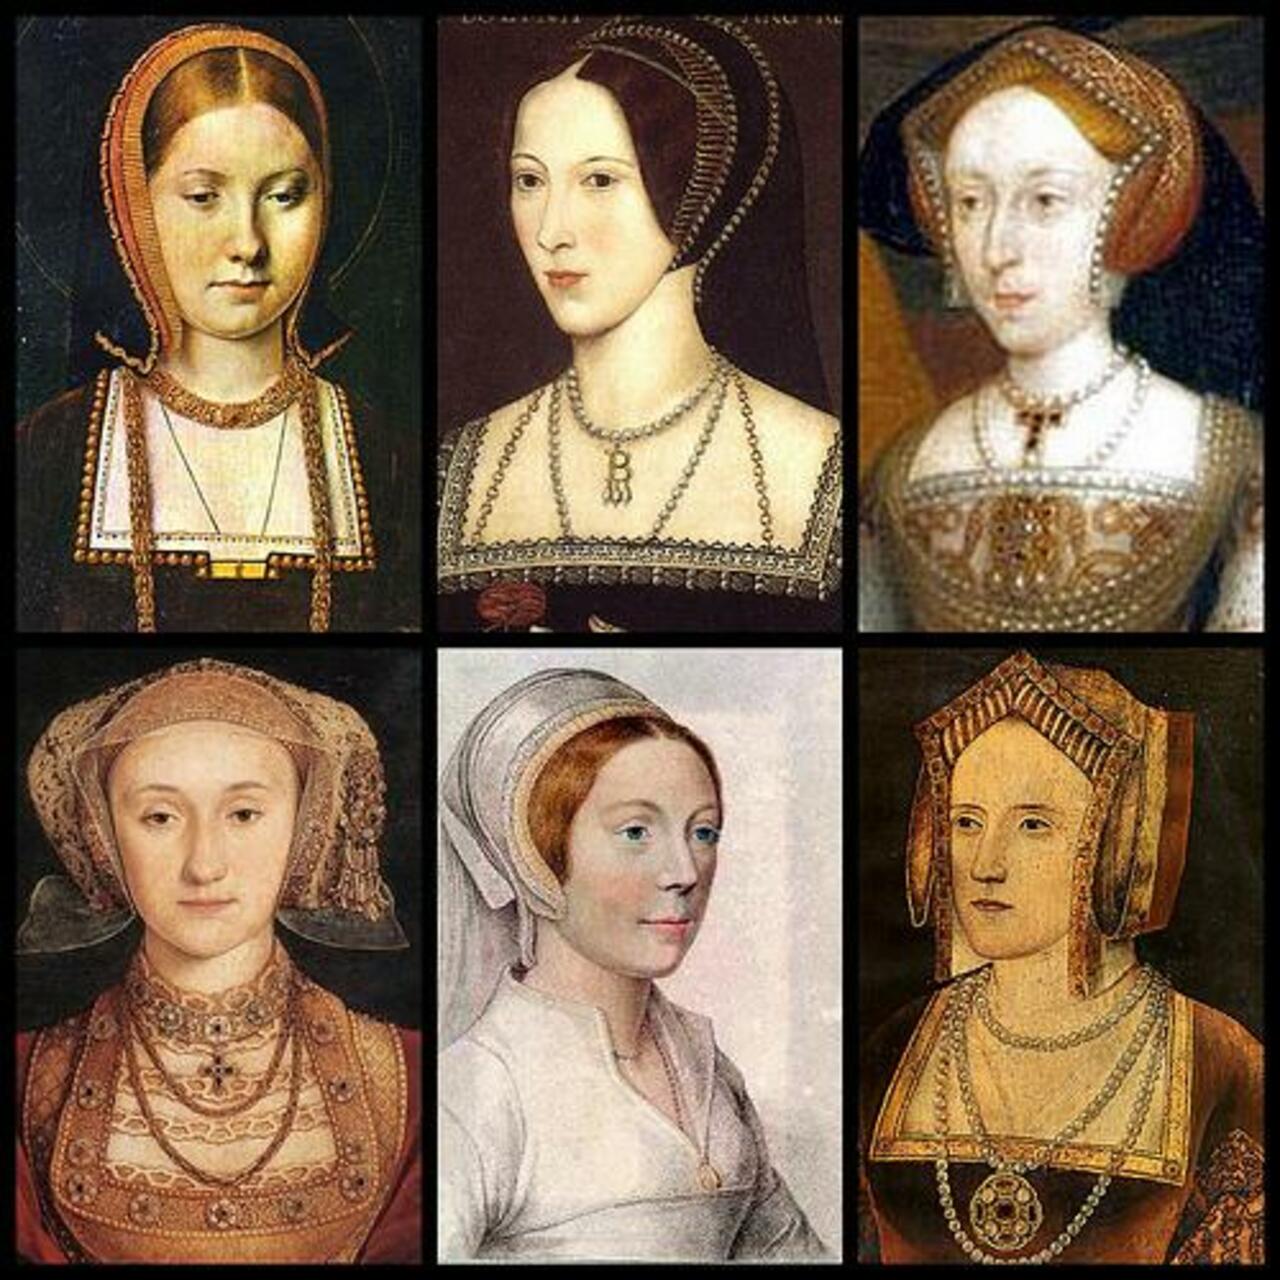 RT @Desailaur: Las seis mujeres de Enrique VIII #art http://t.co/I9OV9DhuPy